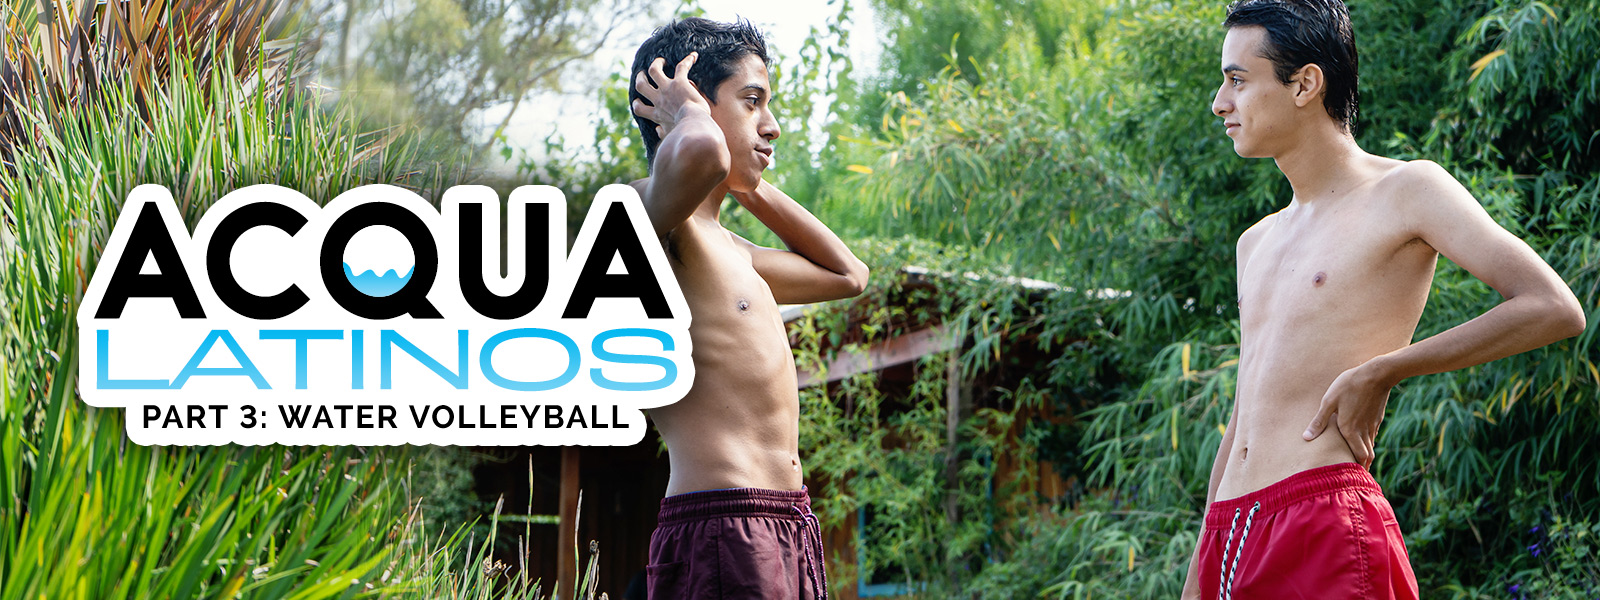 Acqua Latinos | Part 3: Water Volleyball